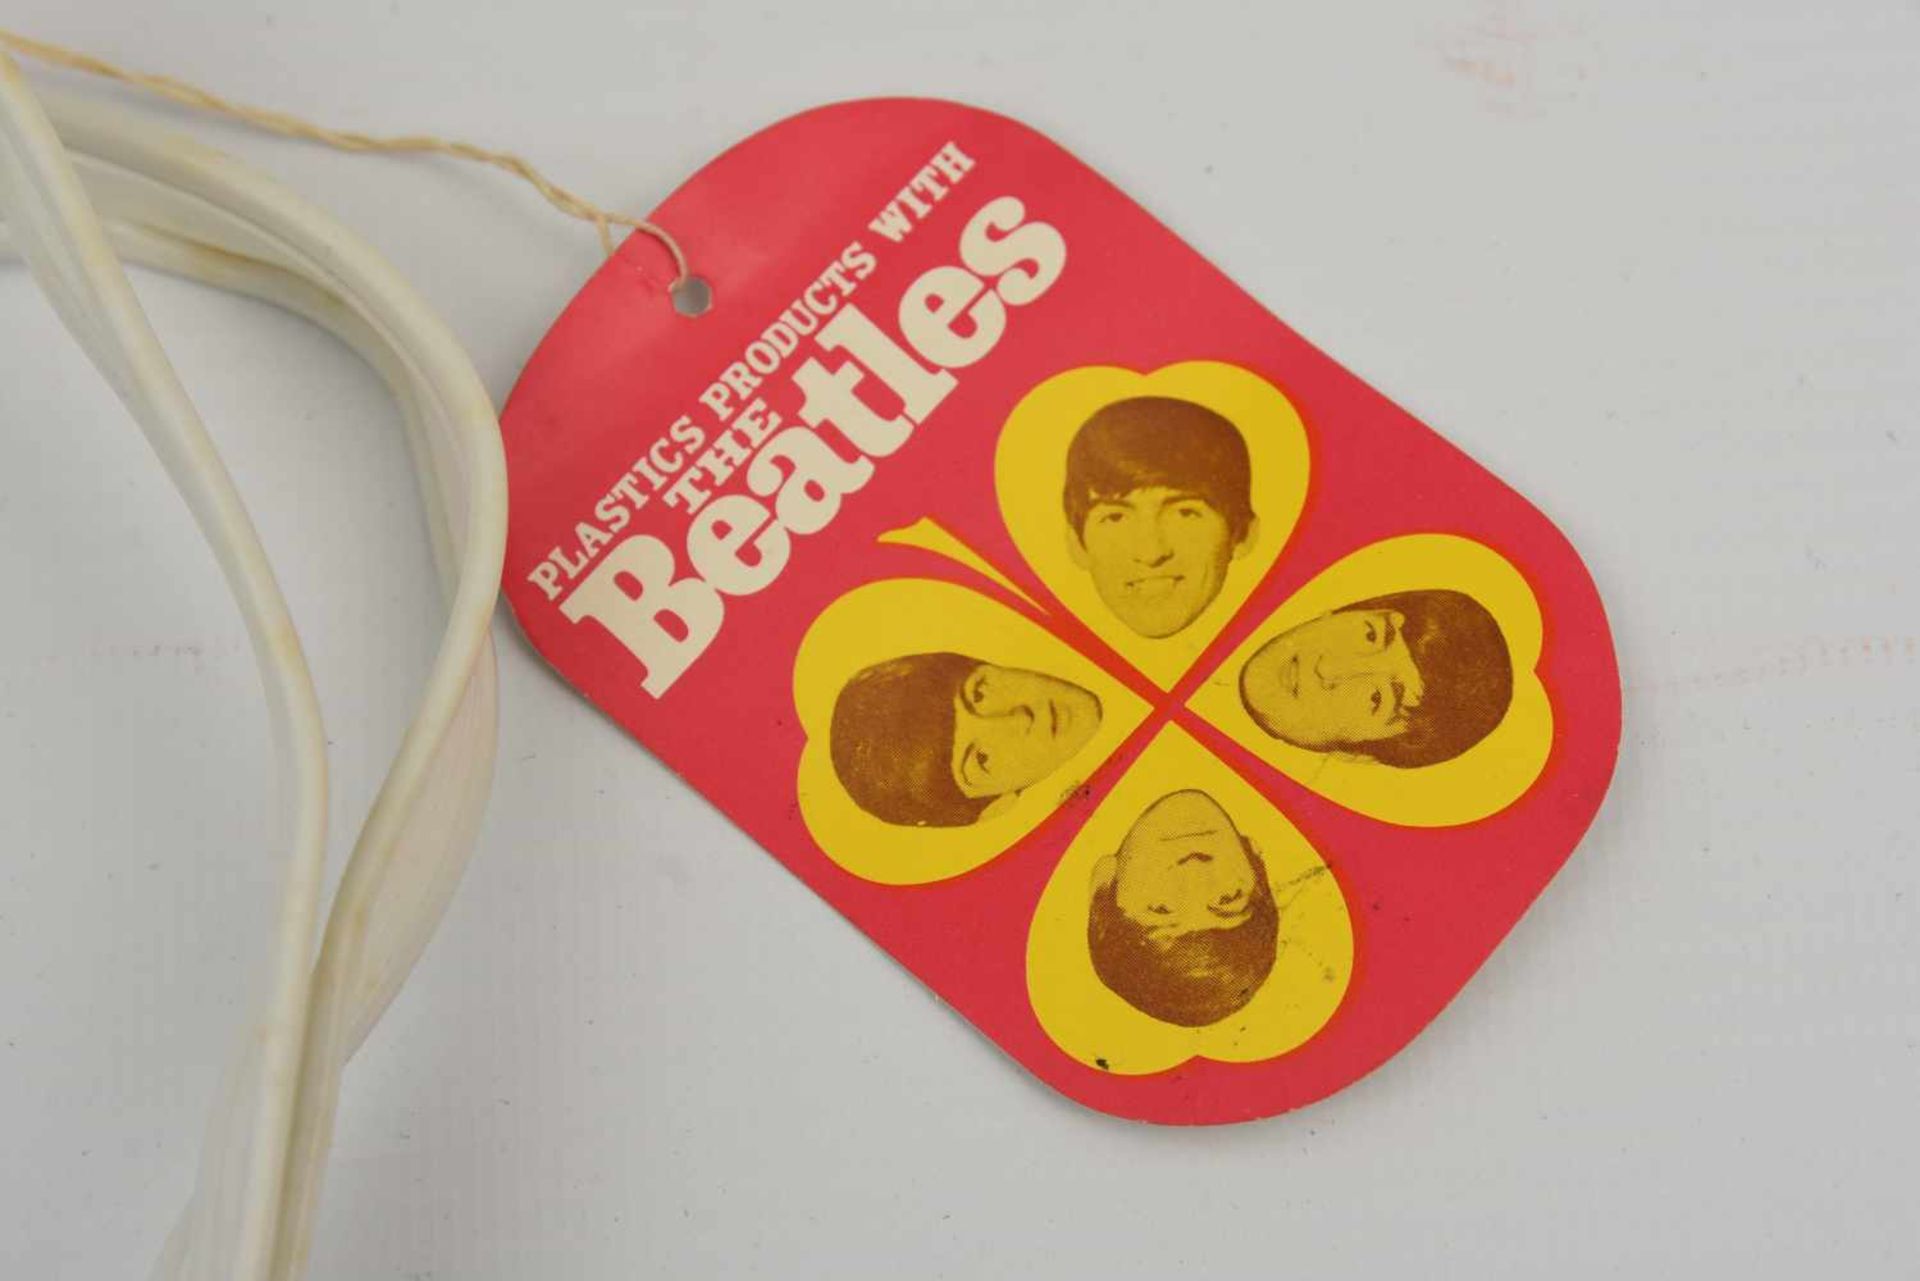 THE BEATLES- MEMORABILIA 9: Tasche, Wako Plastic, Japan 1966 Plastiktasche polychrom bedruckt it - Bild 3 aus 3